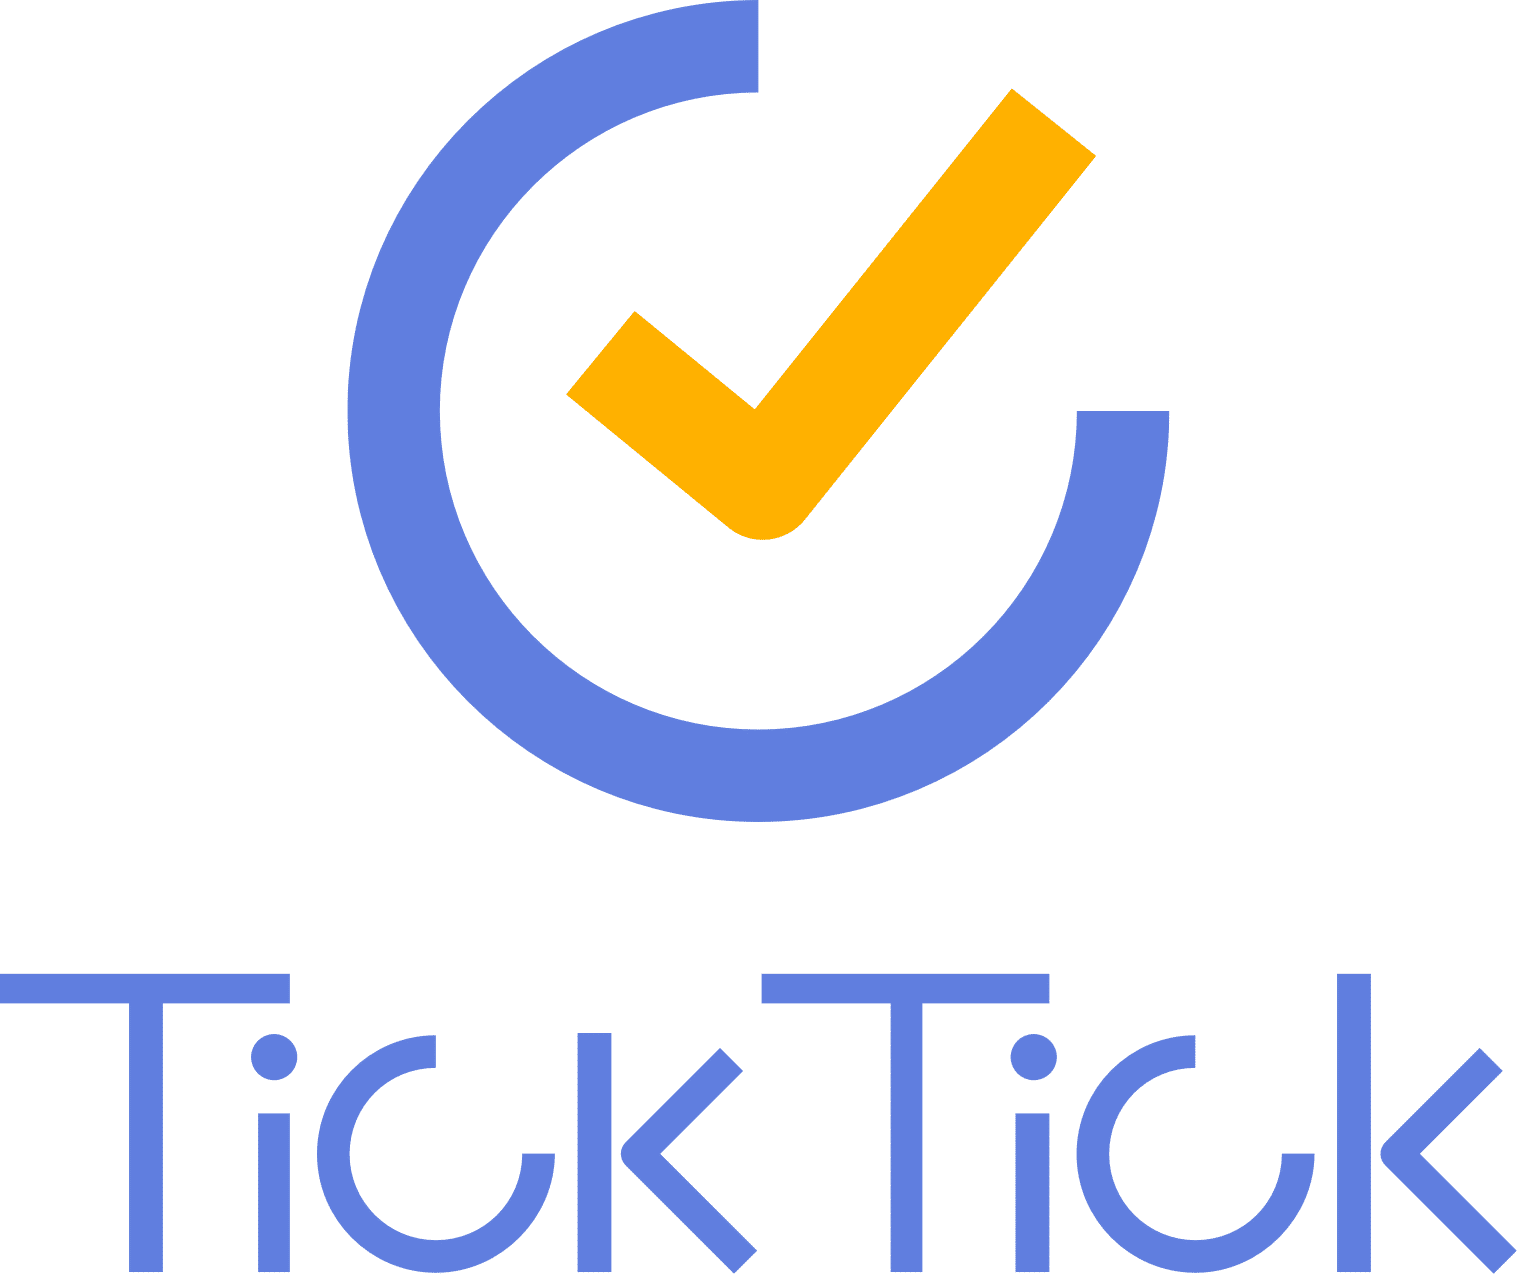 Stickies - Crunchbase Company Profile & Funding